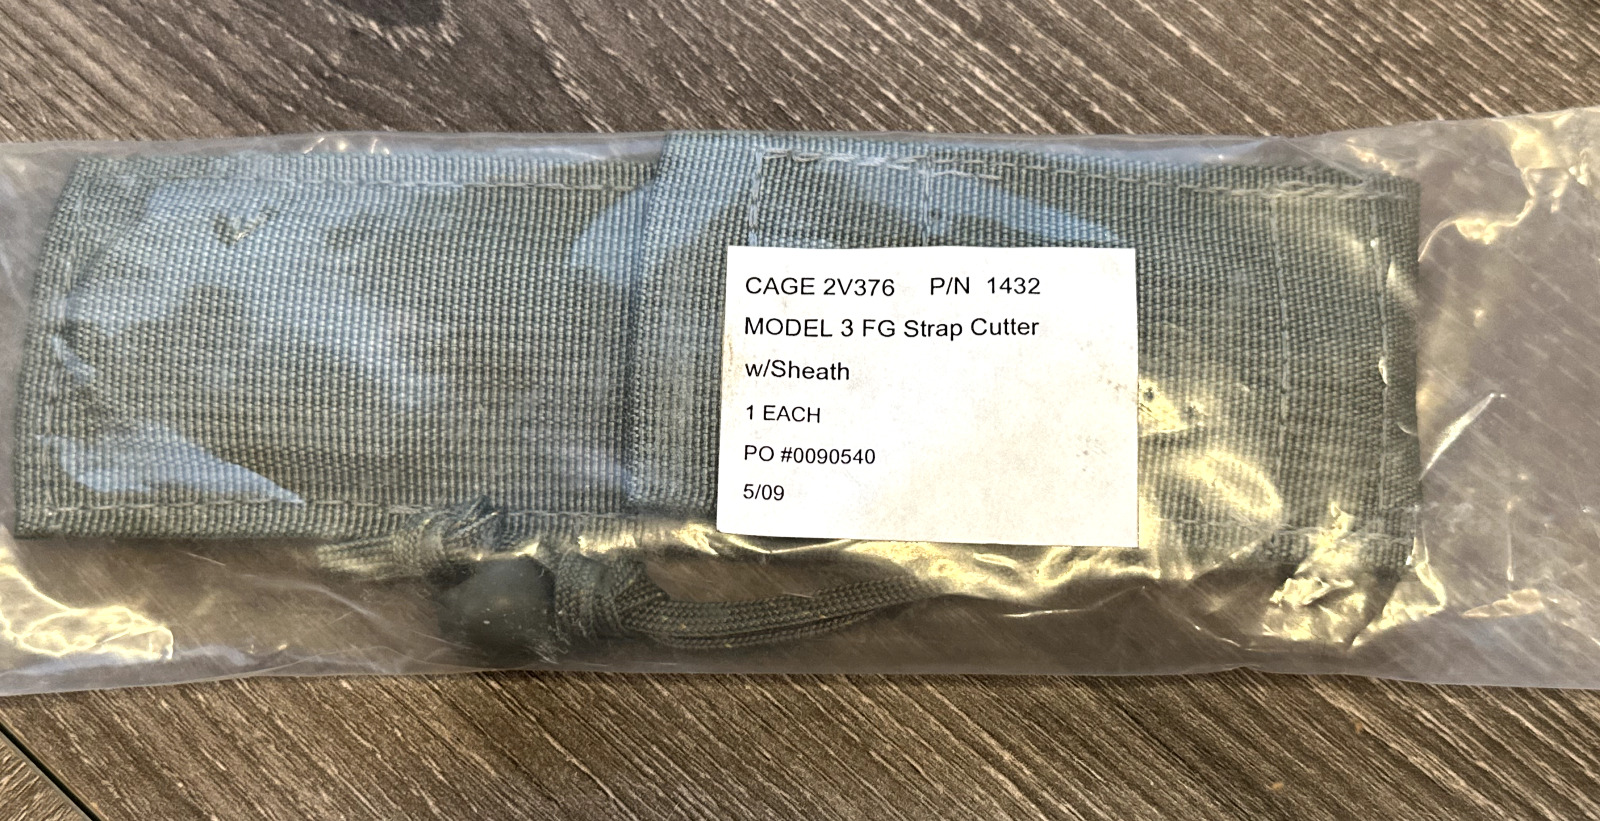 OKC FG Model 3 Strap Cutter With Sheath Military Foliage New in bag